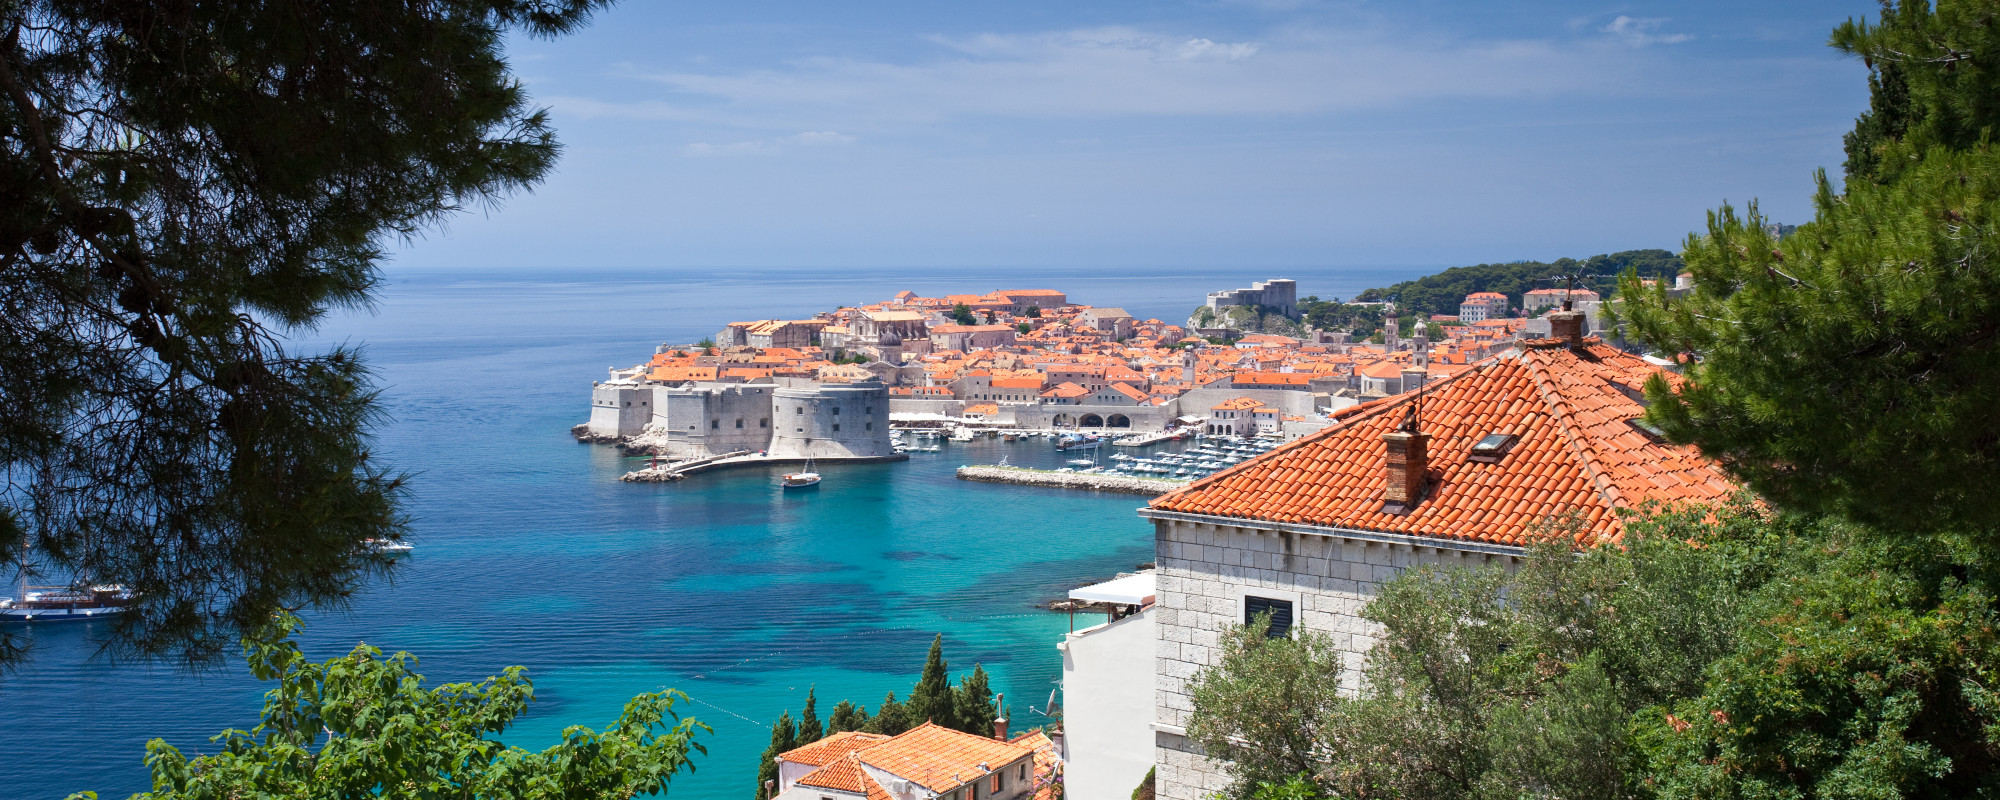 Panoramablick auf Dubrovnik mit blauem meer und rustikaler Stadt in Kroatien